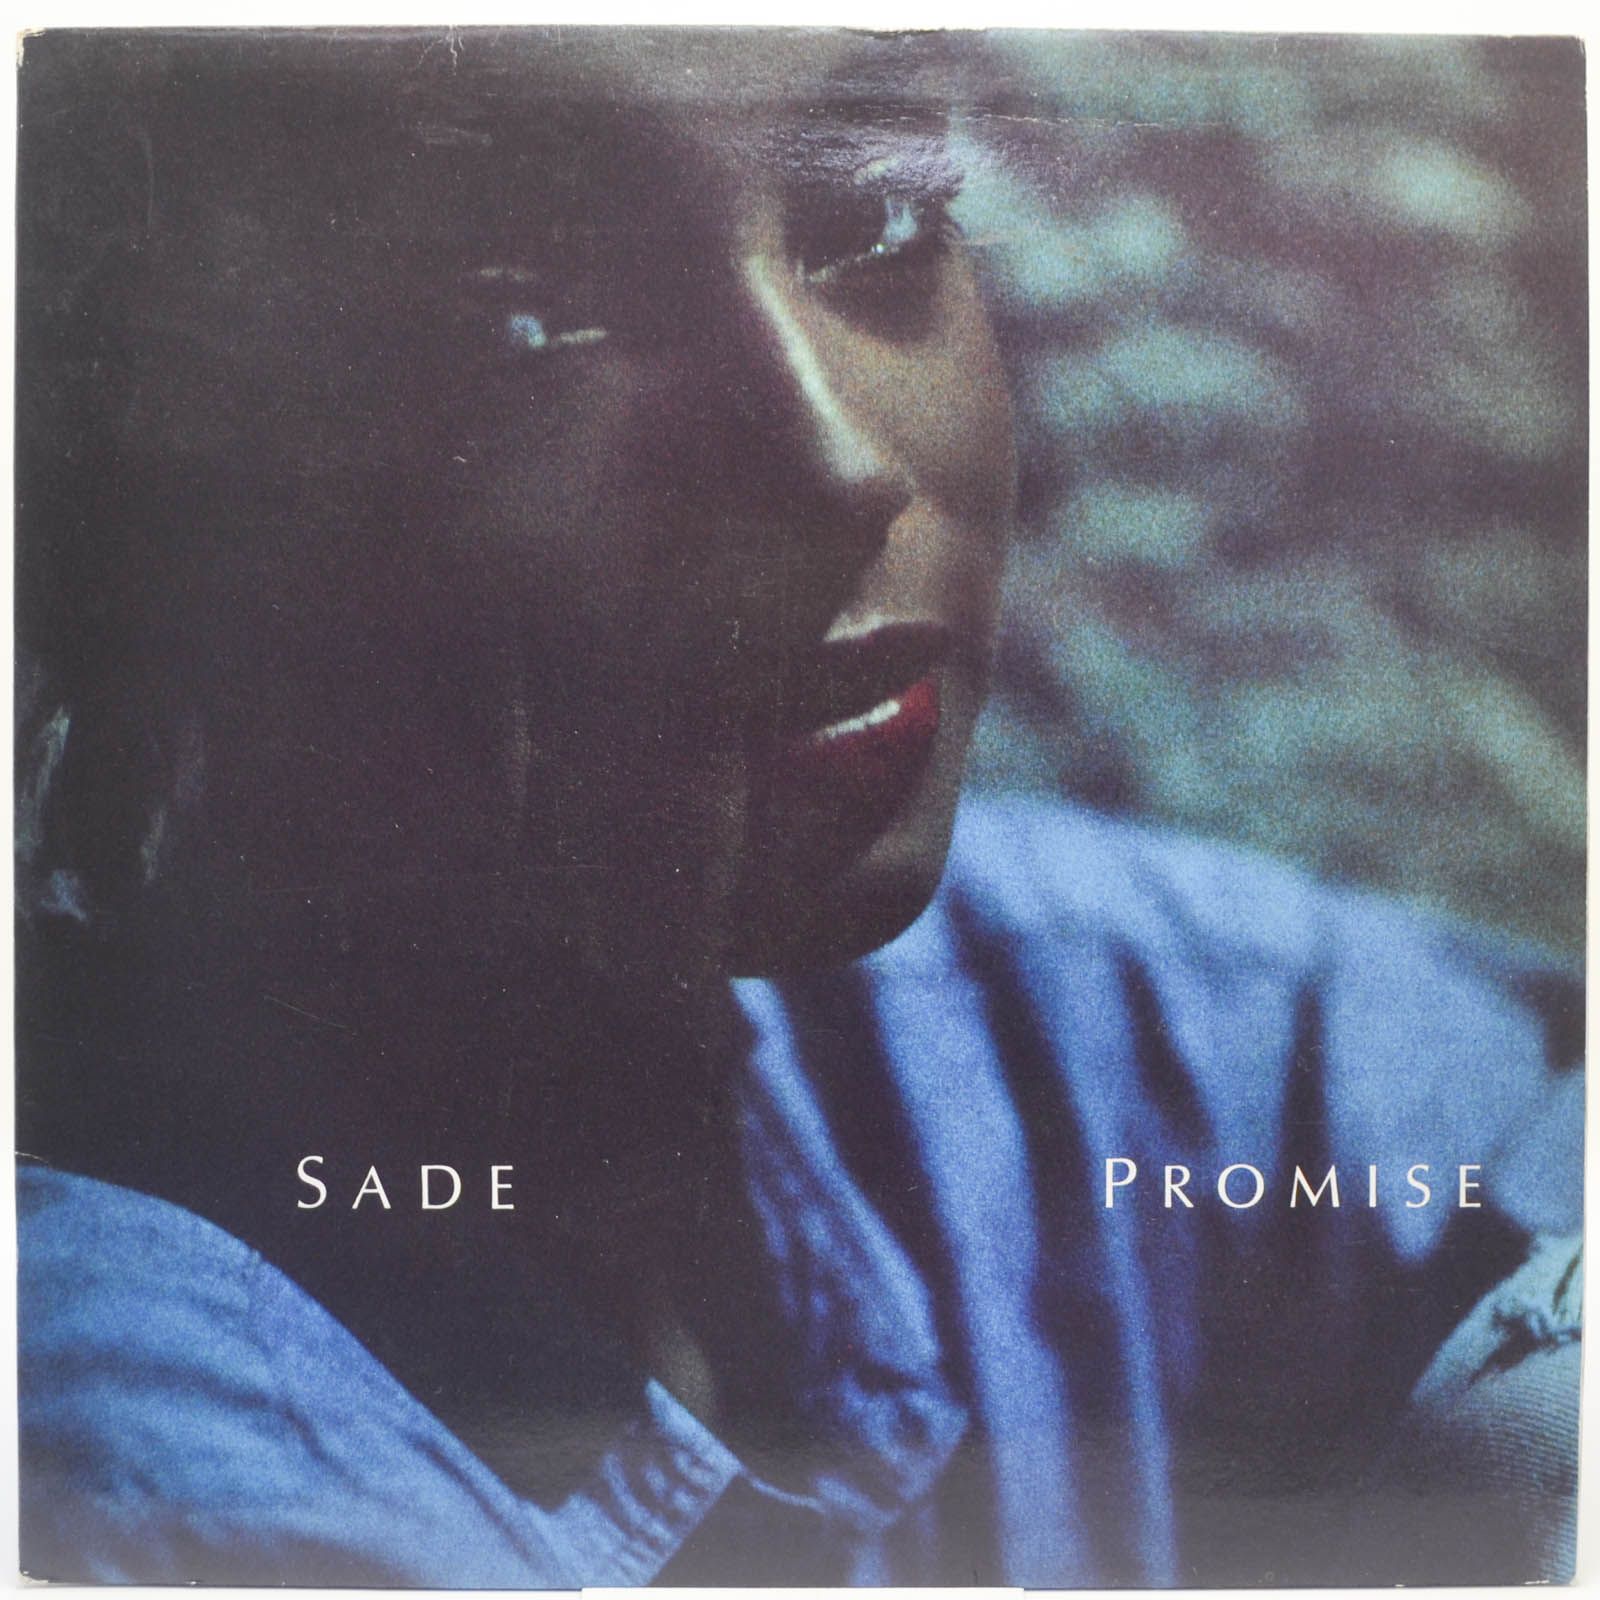 Sade — Promise, 1985